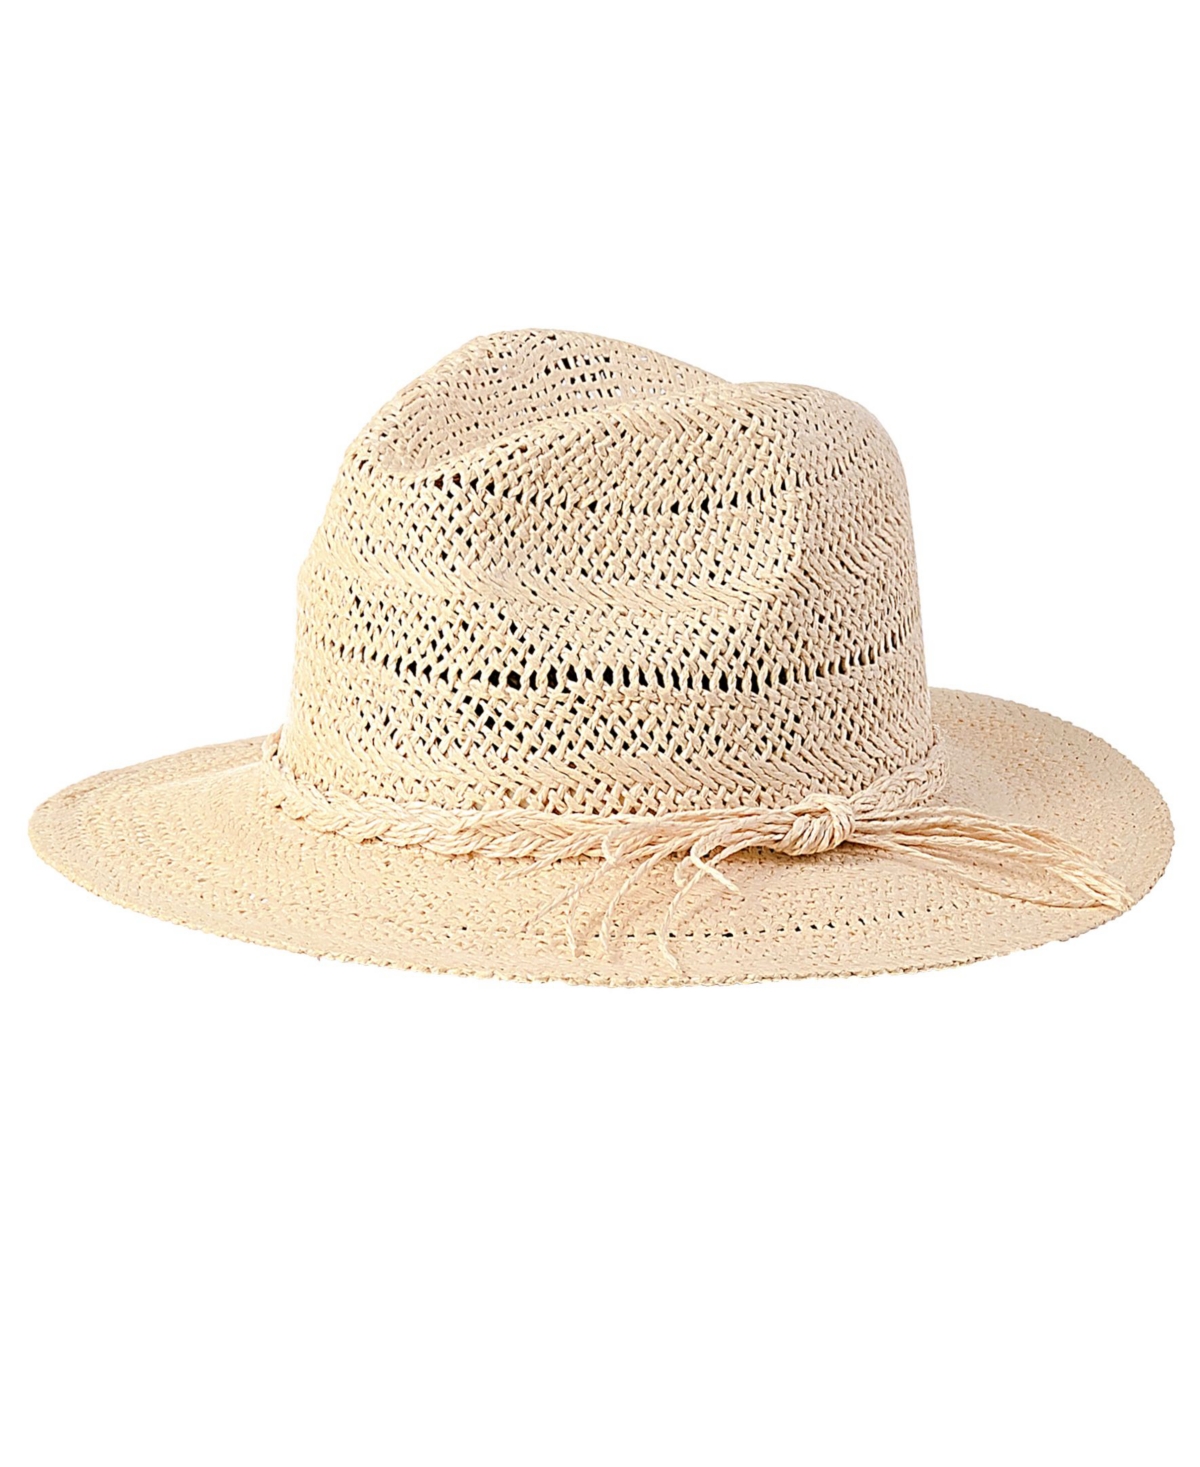 Women's Straw Panama Hat - Natural